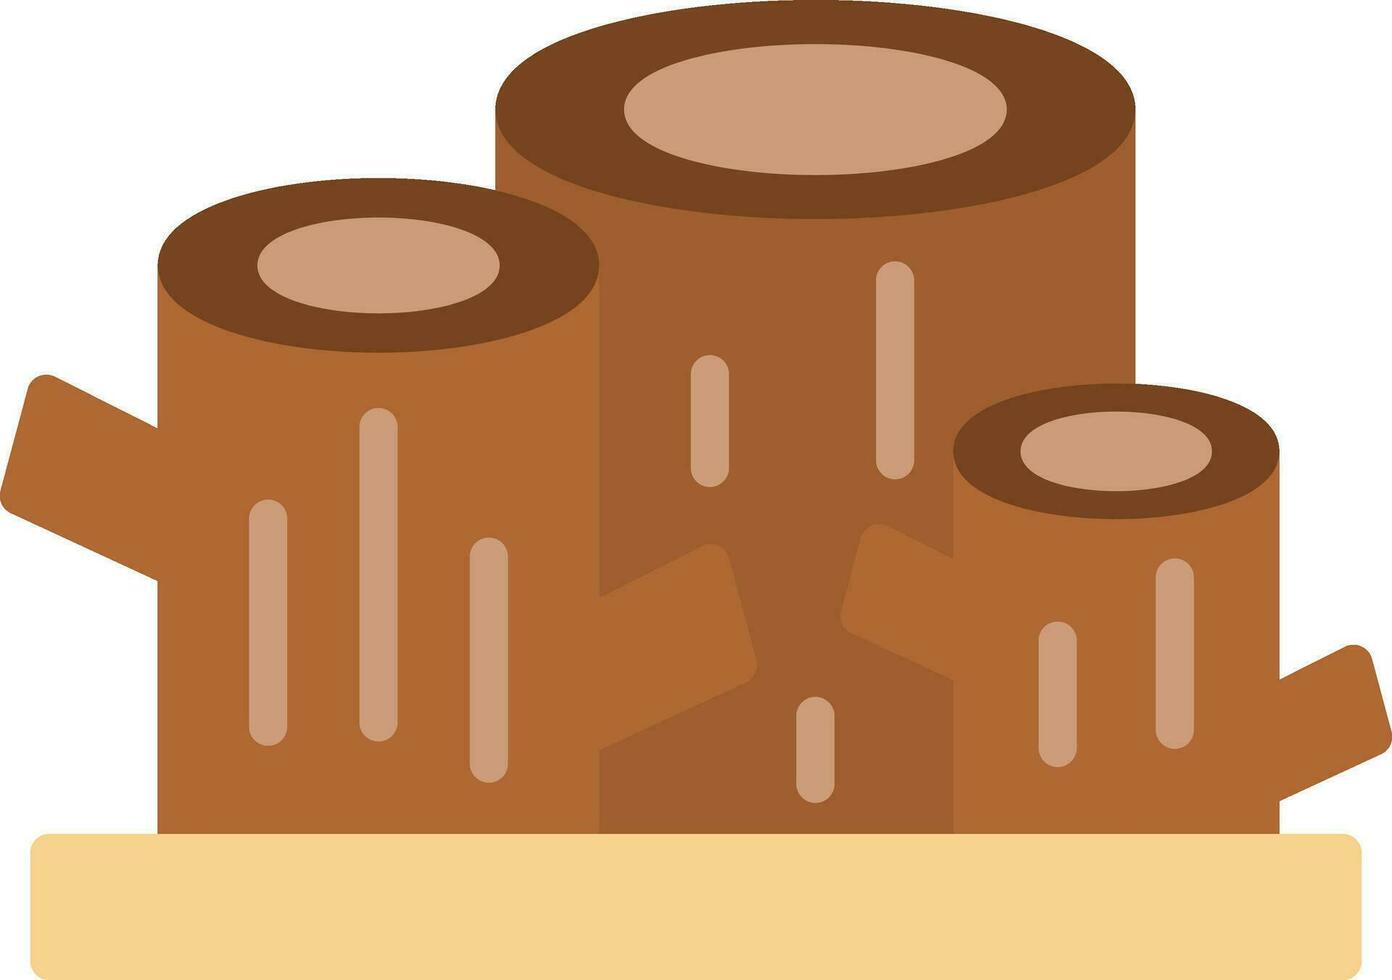 Logs Vector Icon Design